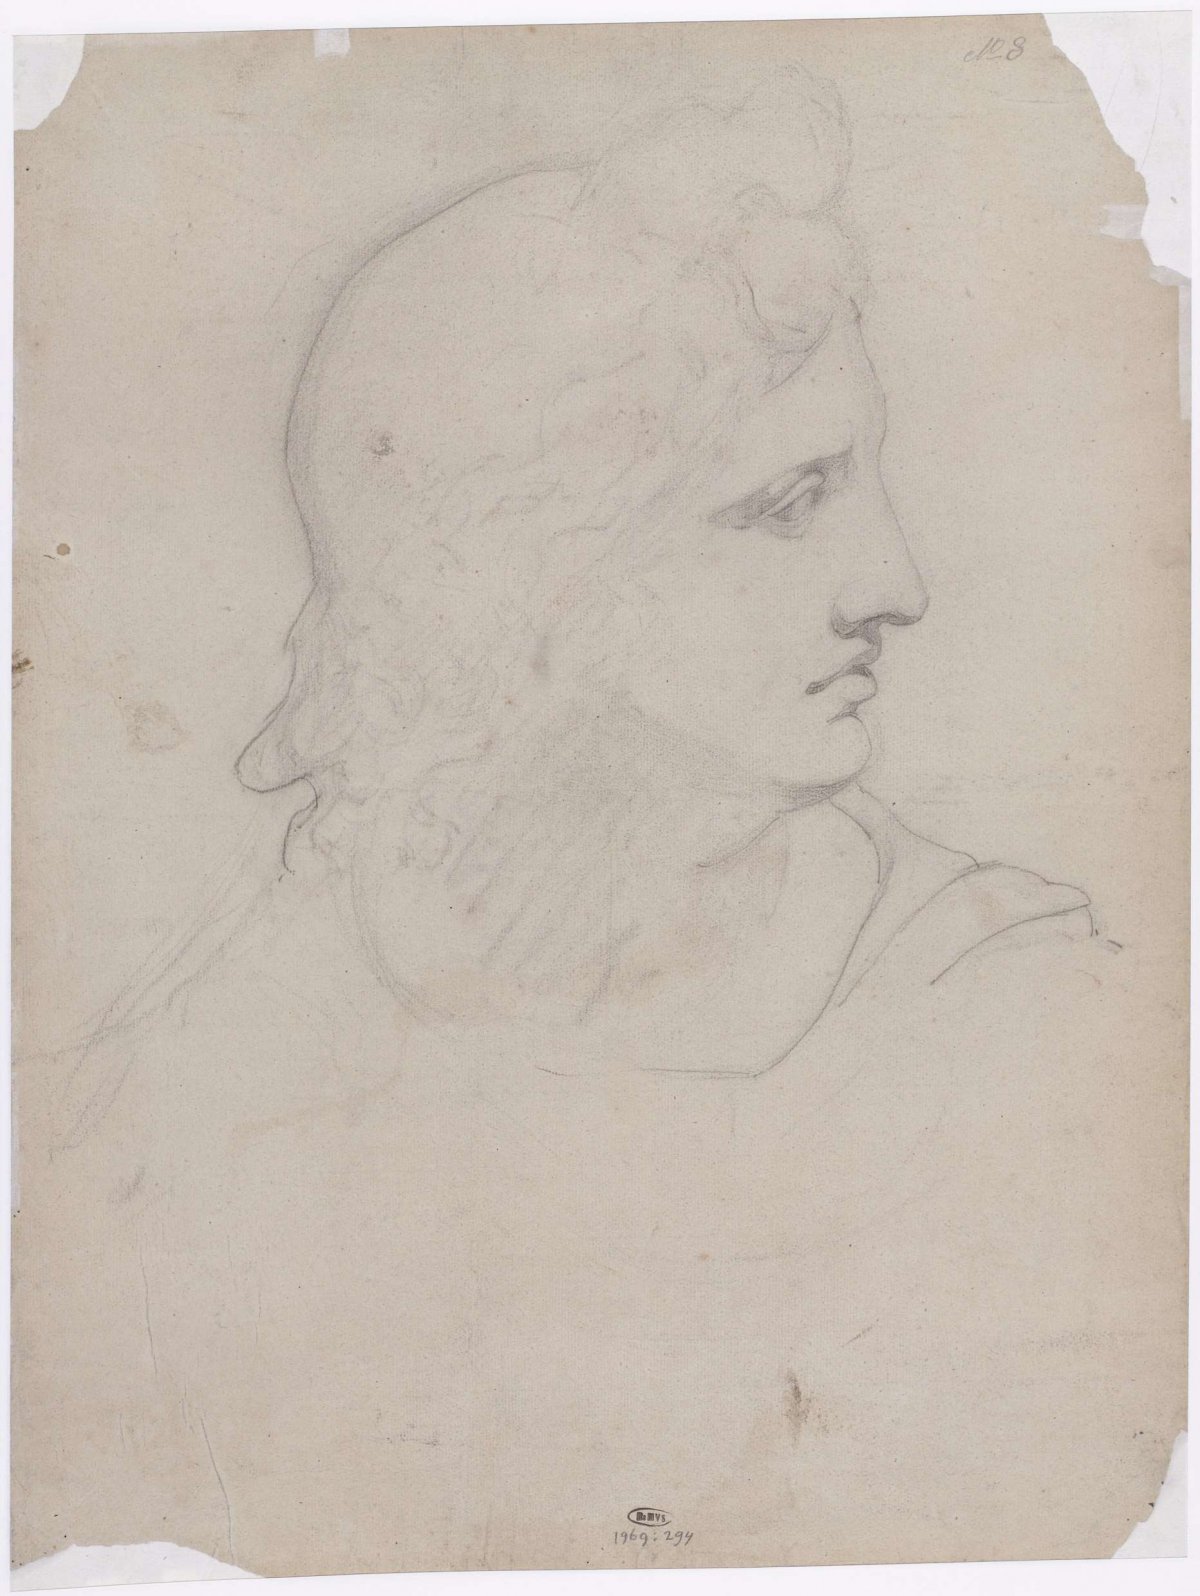 Academy study of Roman head, Gerrit Willem Dijsselhof, 1876 - 1924